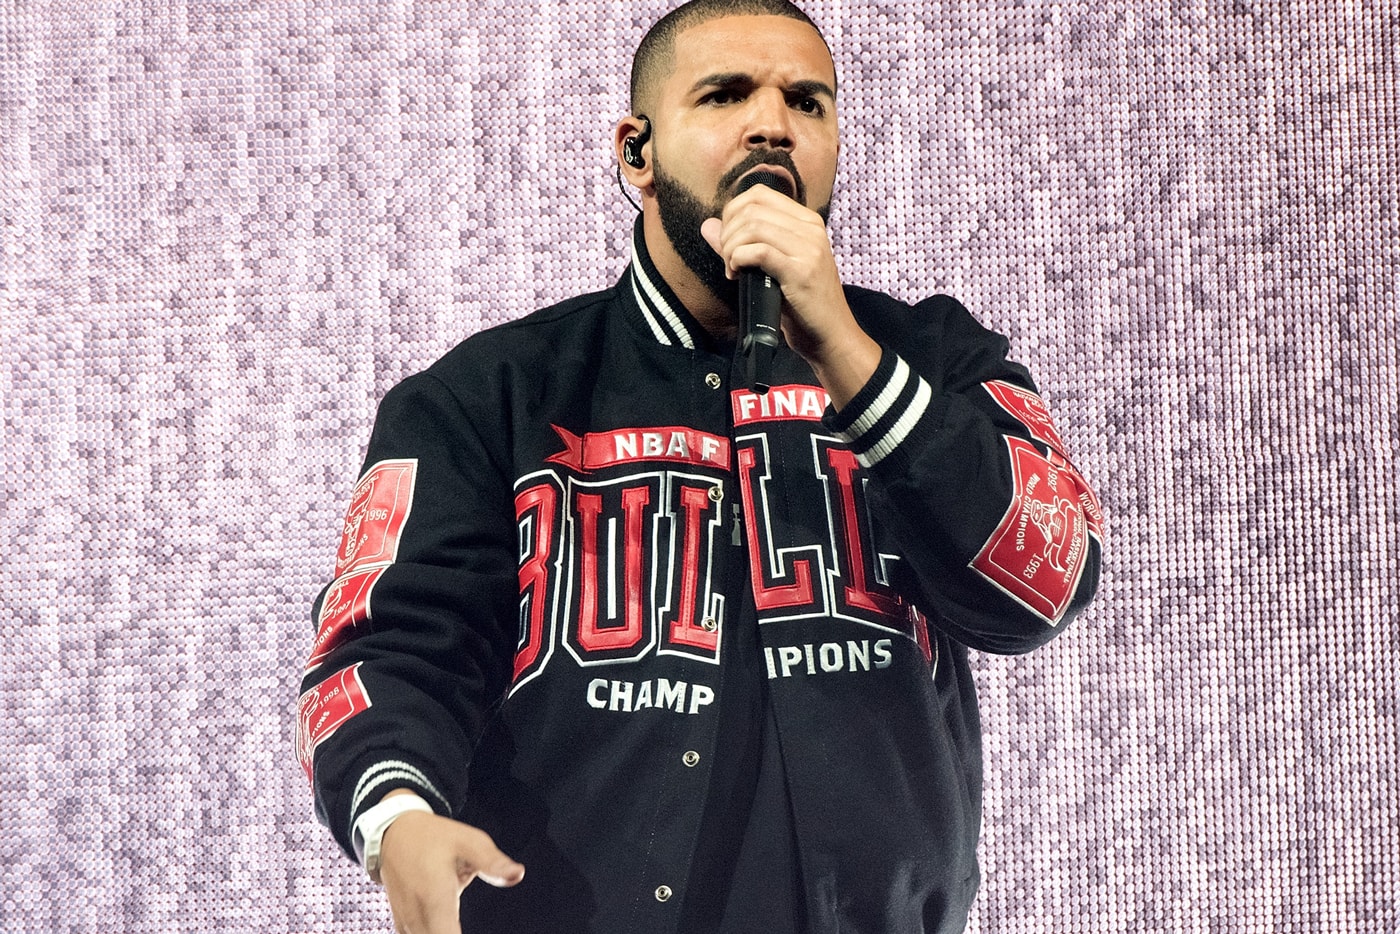 Drake More Life Streamed 600 Million Times Break Record